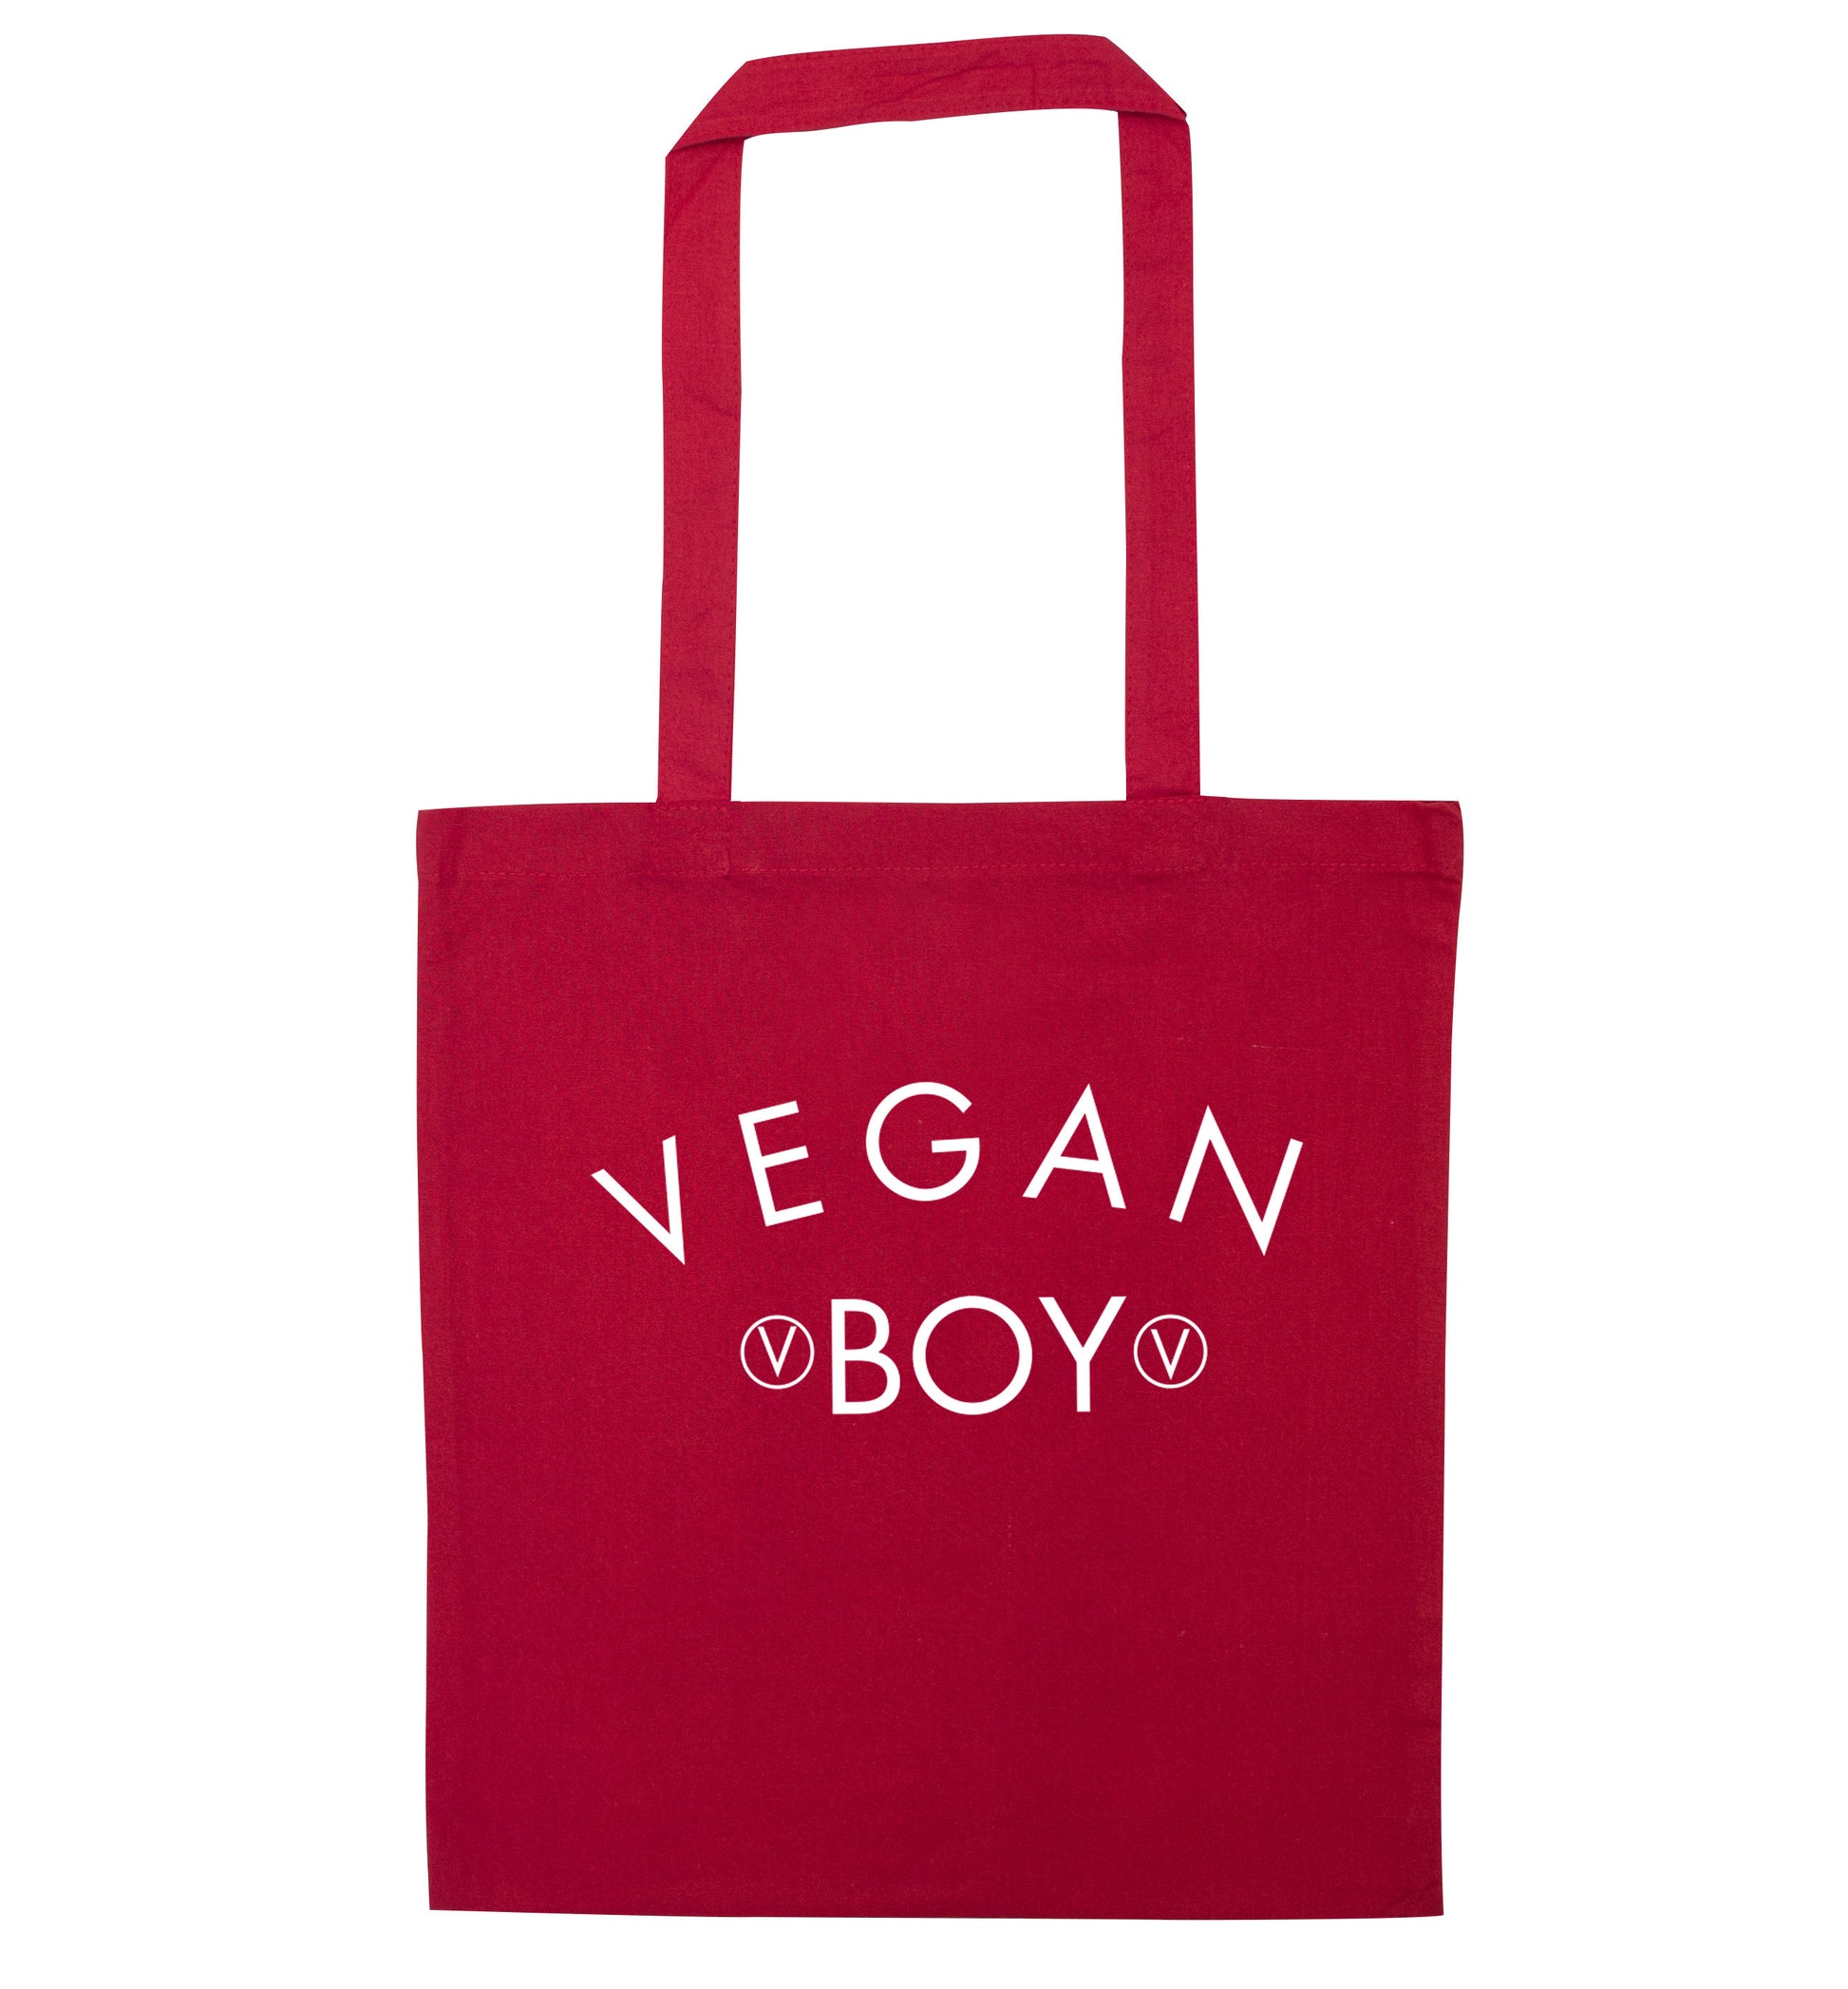 Vegan boy red tote bag